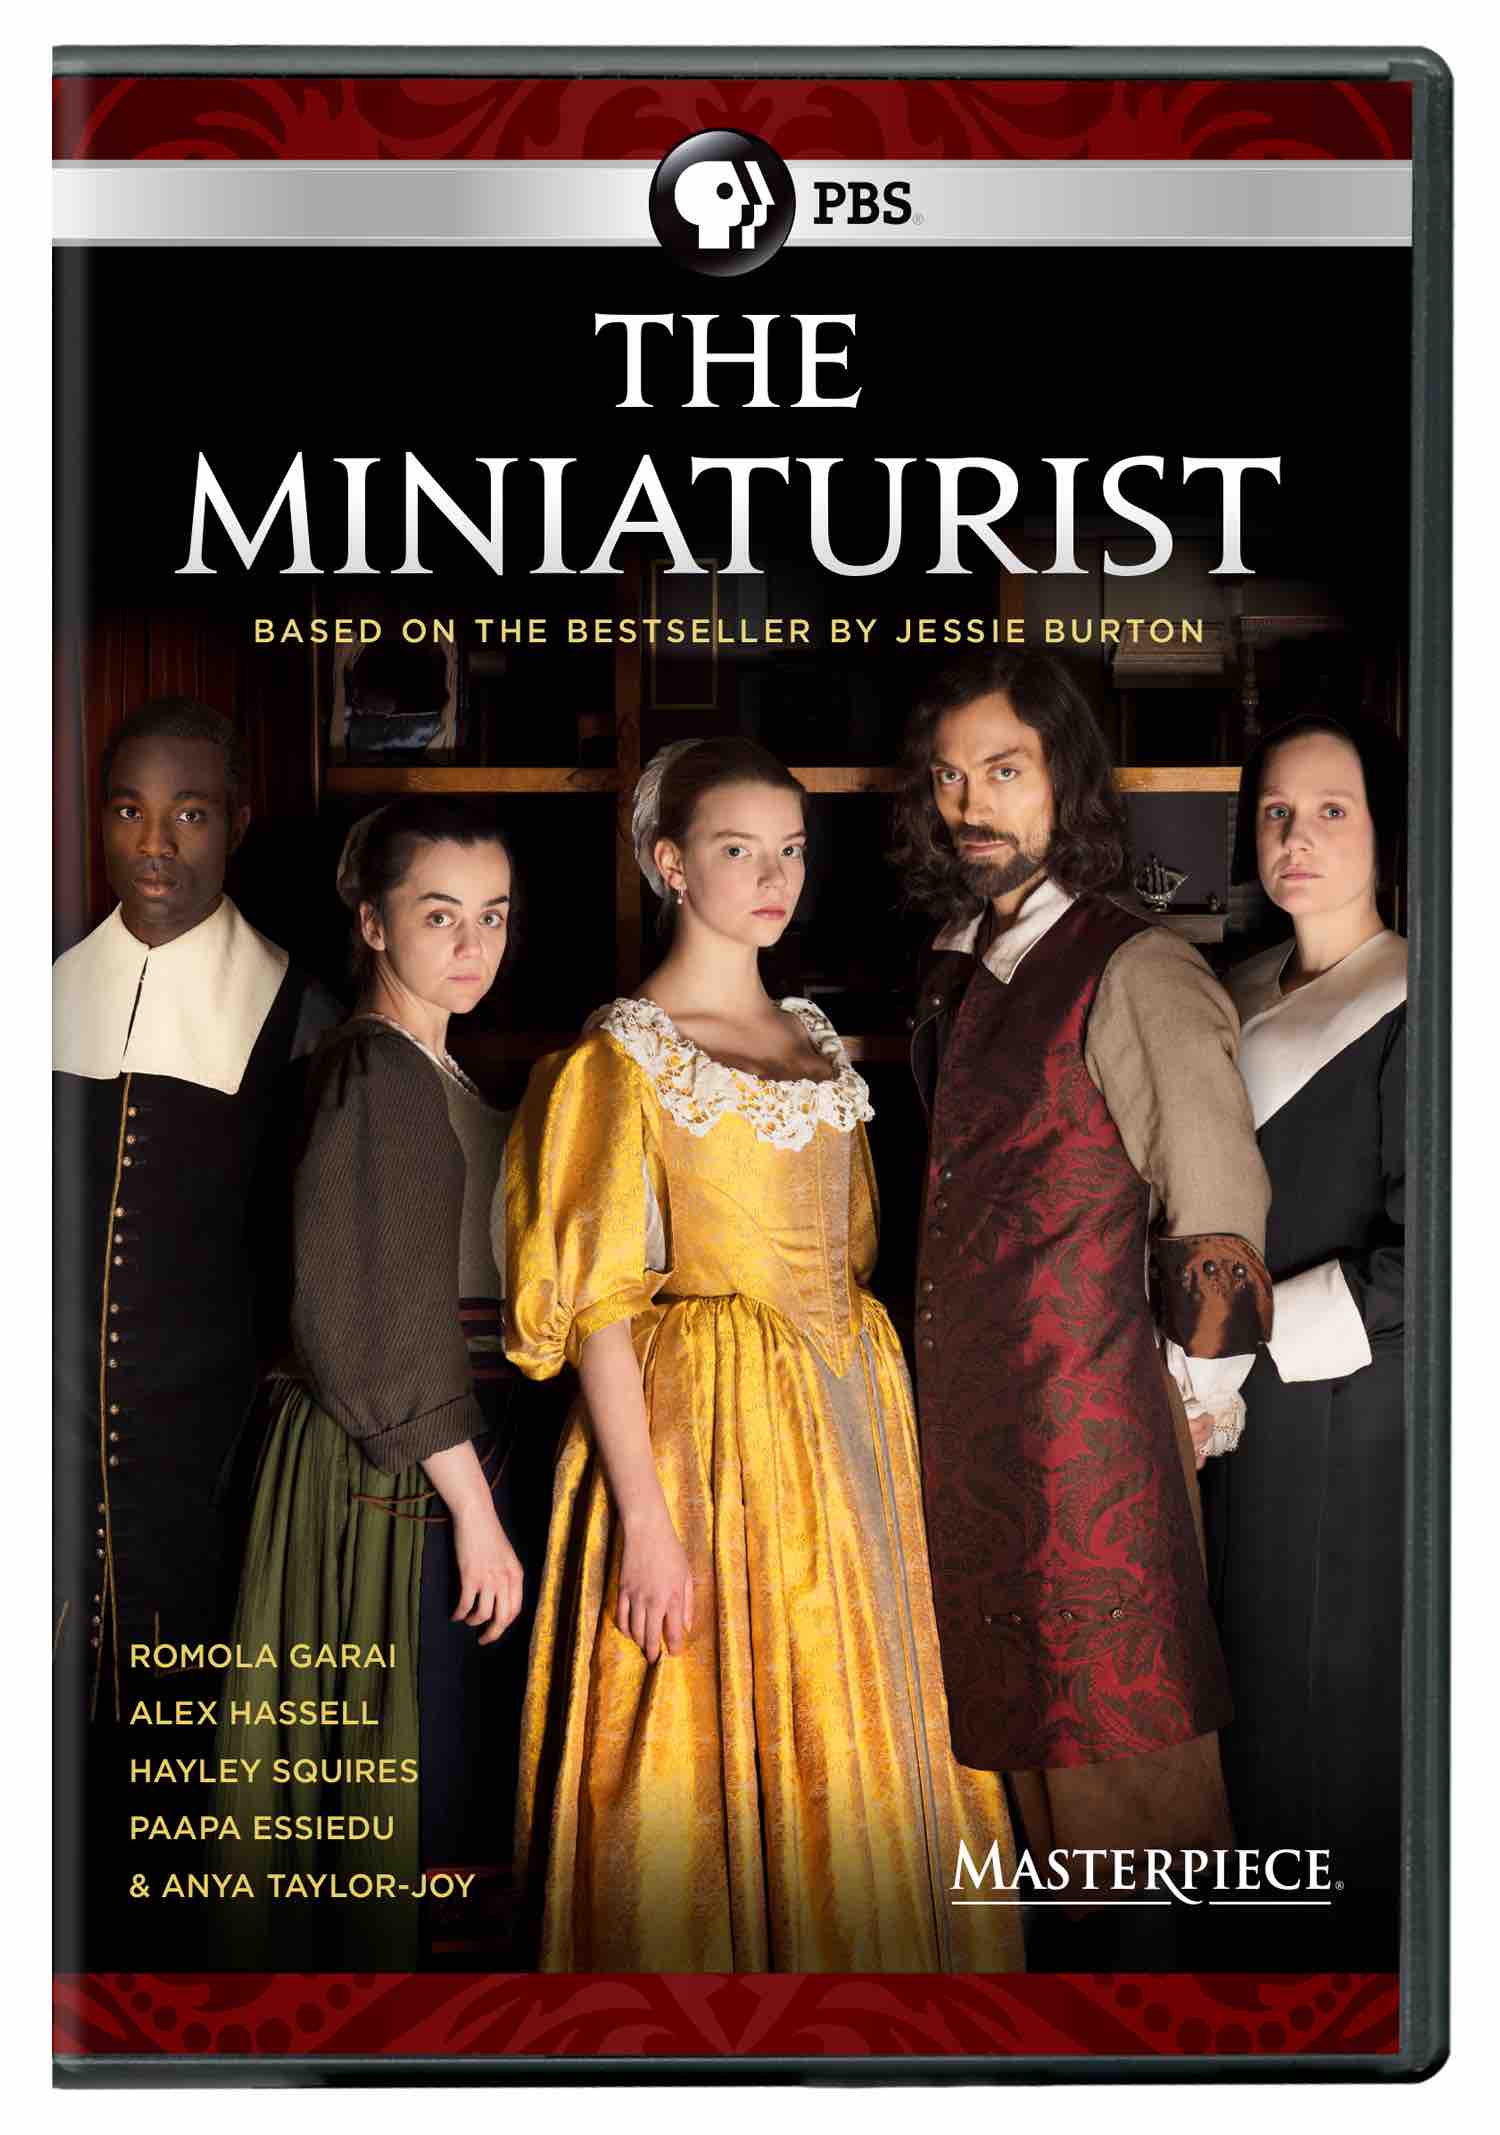 The Miniaturist DVD cover